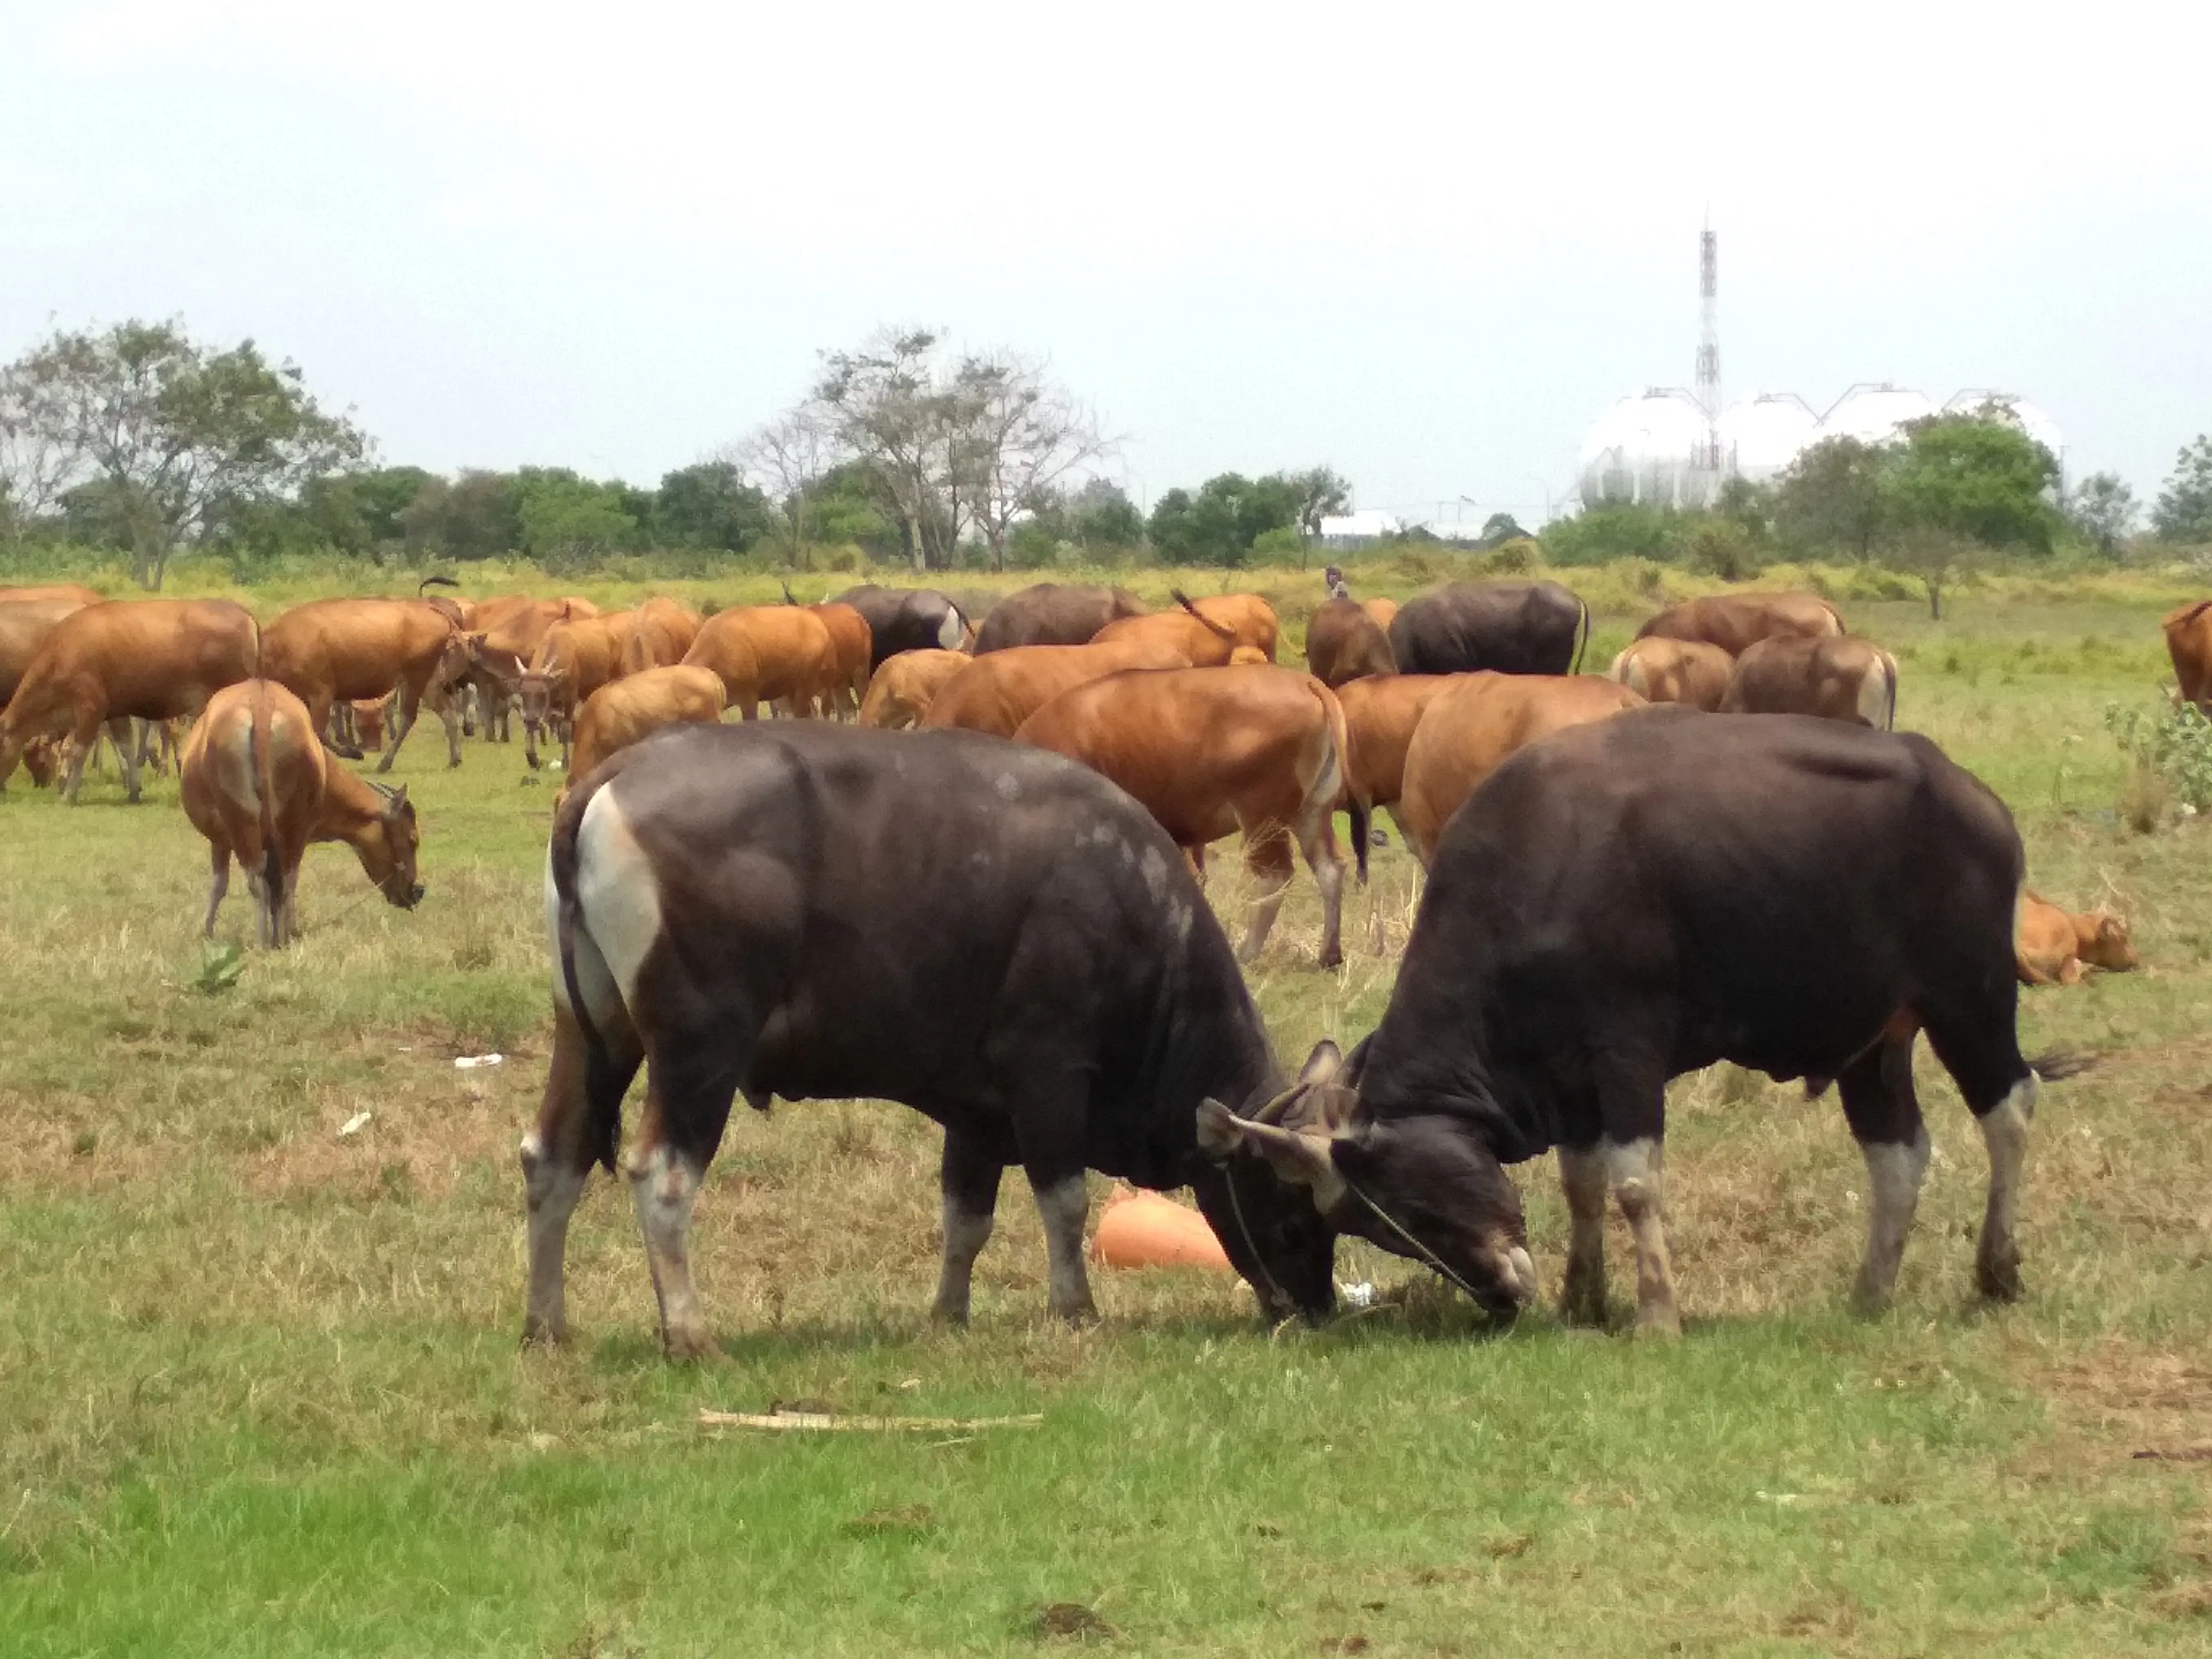 Hasil kawin silang sapi Bali dan banteng Jawa menghasilkan sapi dengan komposisi daging yang lebih banyak dibandingkan tulang. (Liputan6.com/Panji Prayitno)